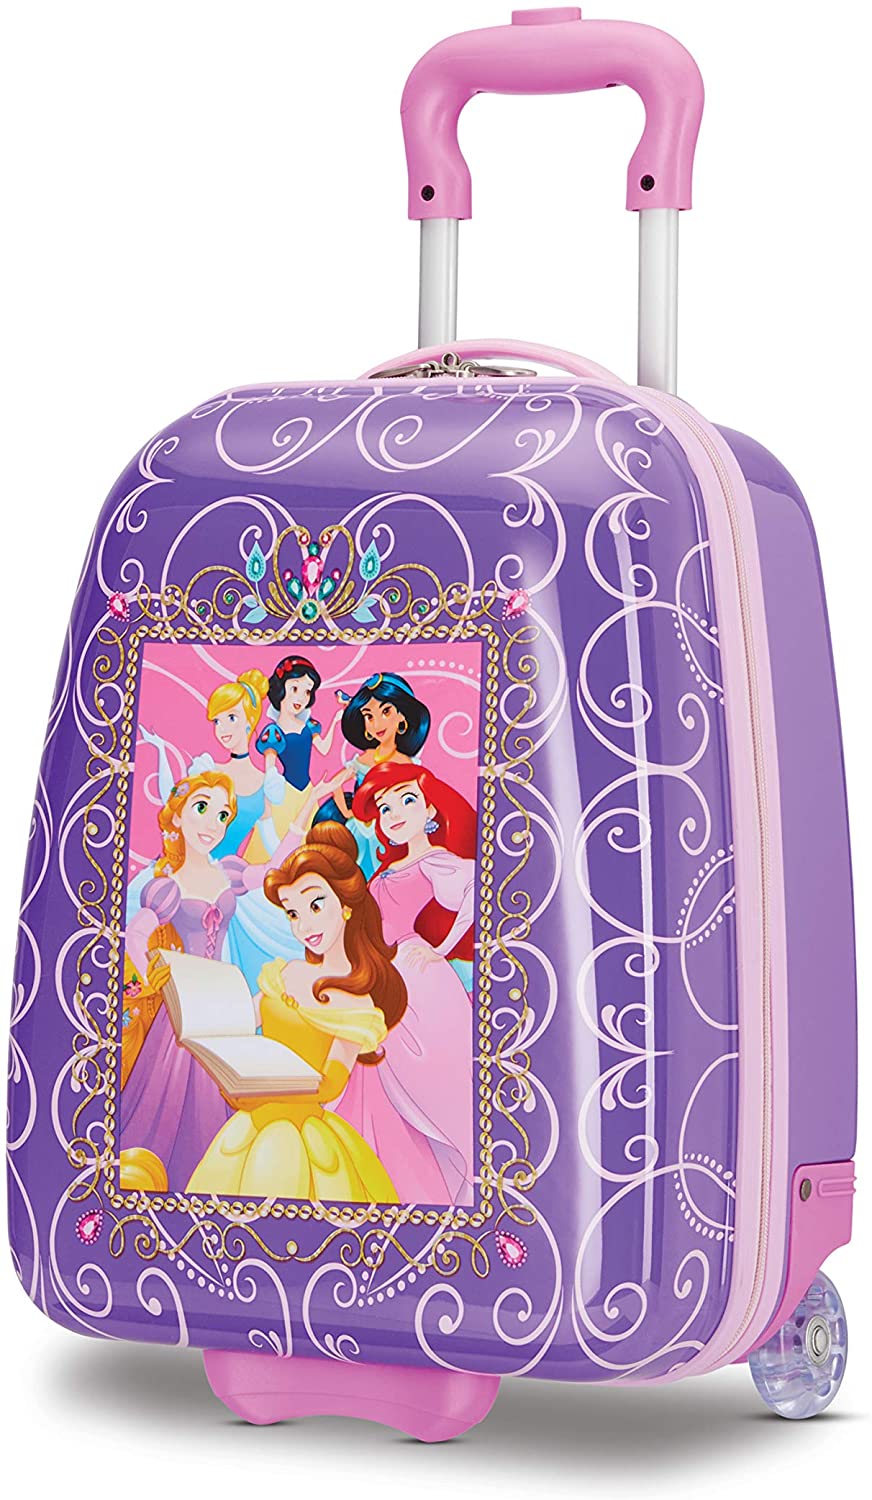 3. American Tourister Kids' Disney Luggage